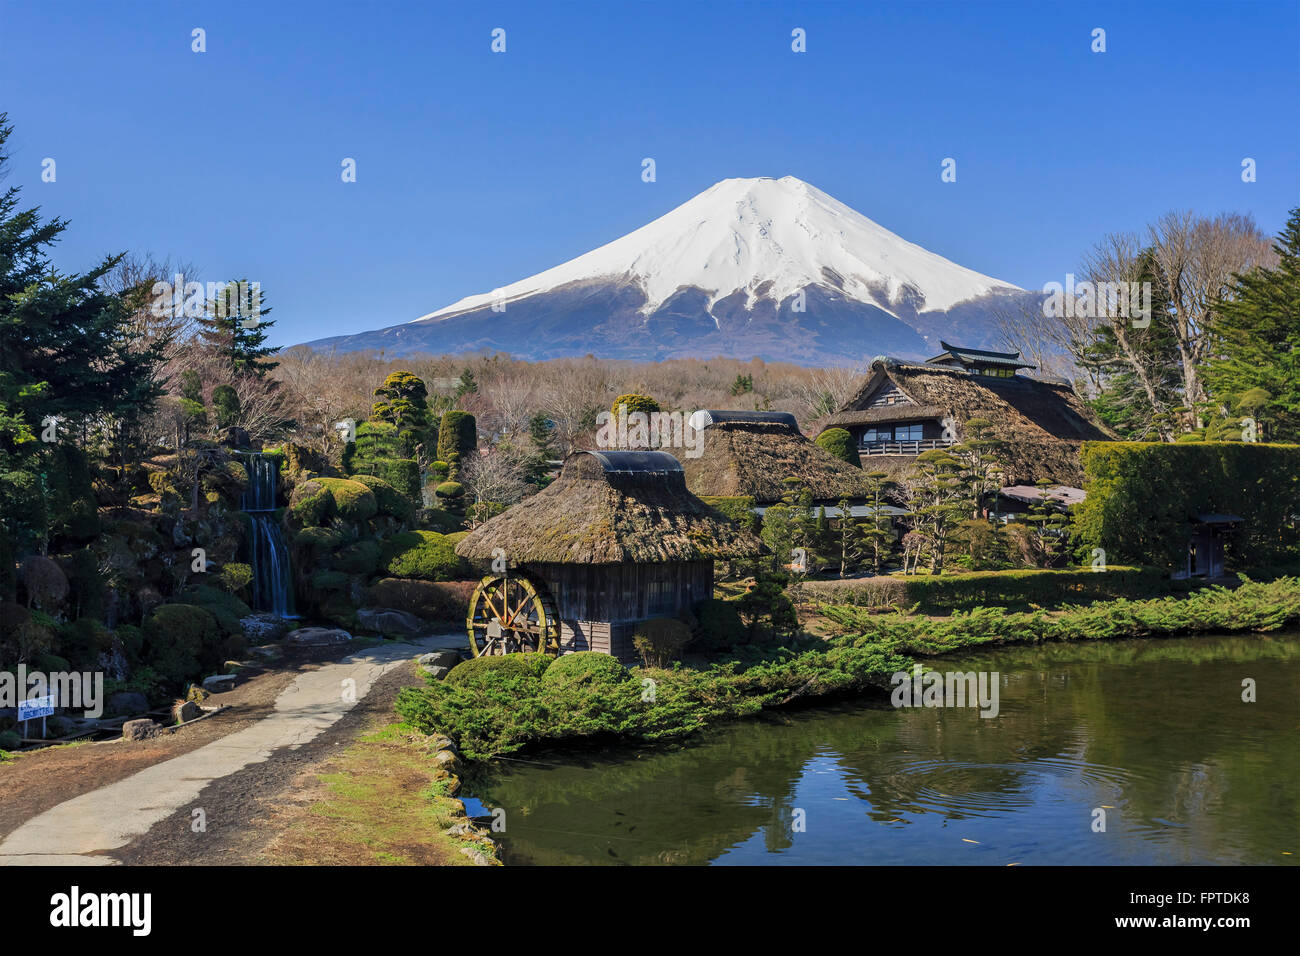 The sacred mountain - Mt. Fuji at Japan, spring Stock Photo